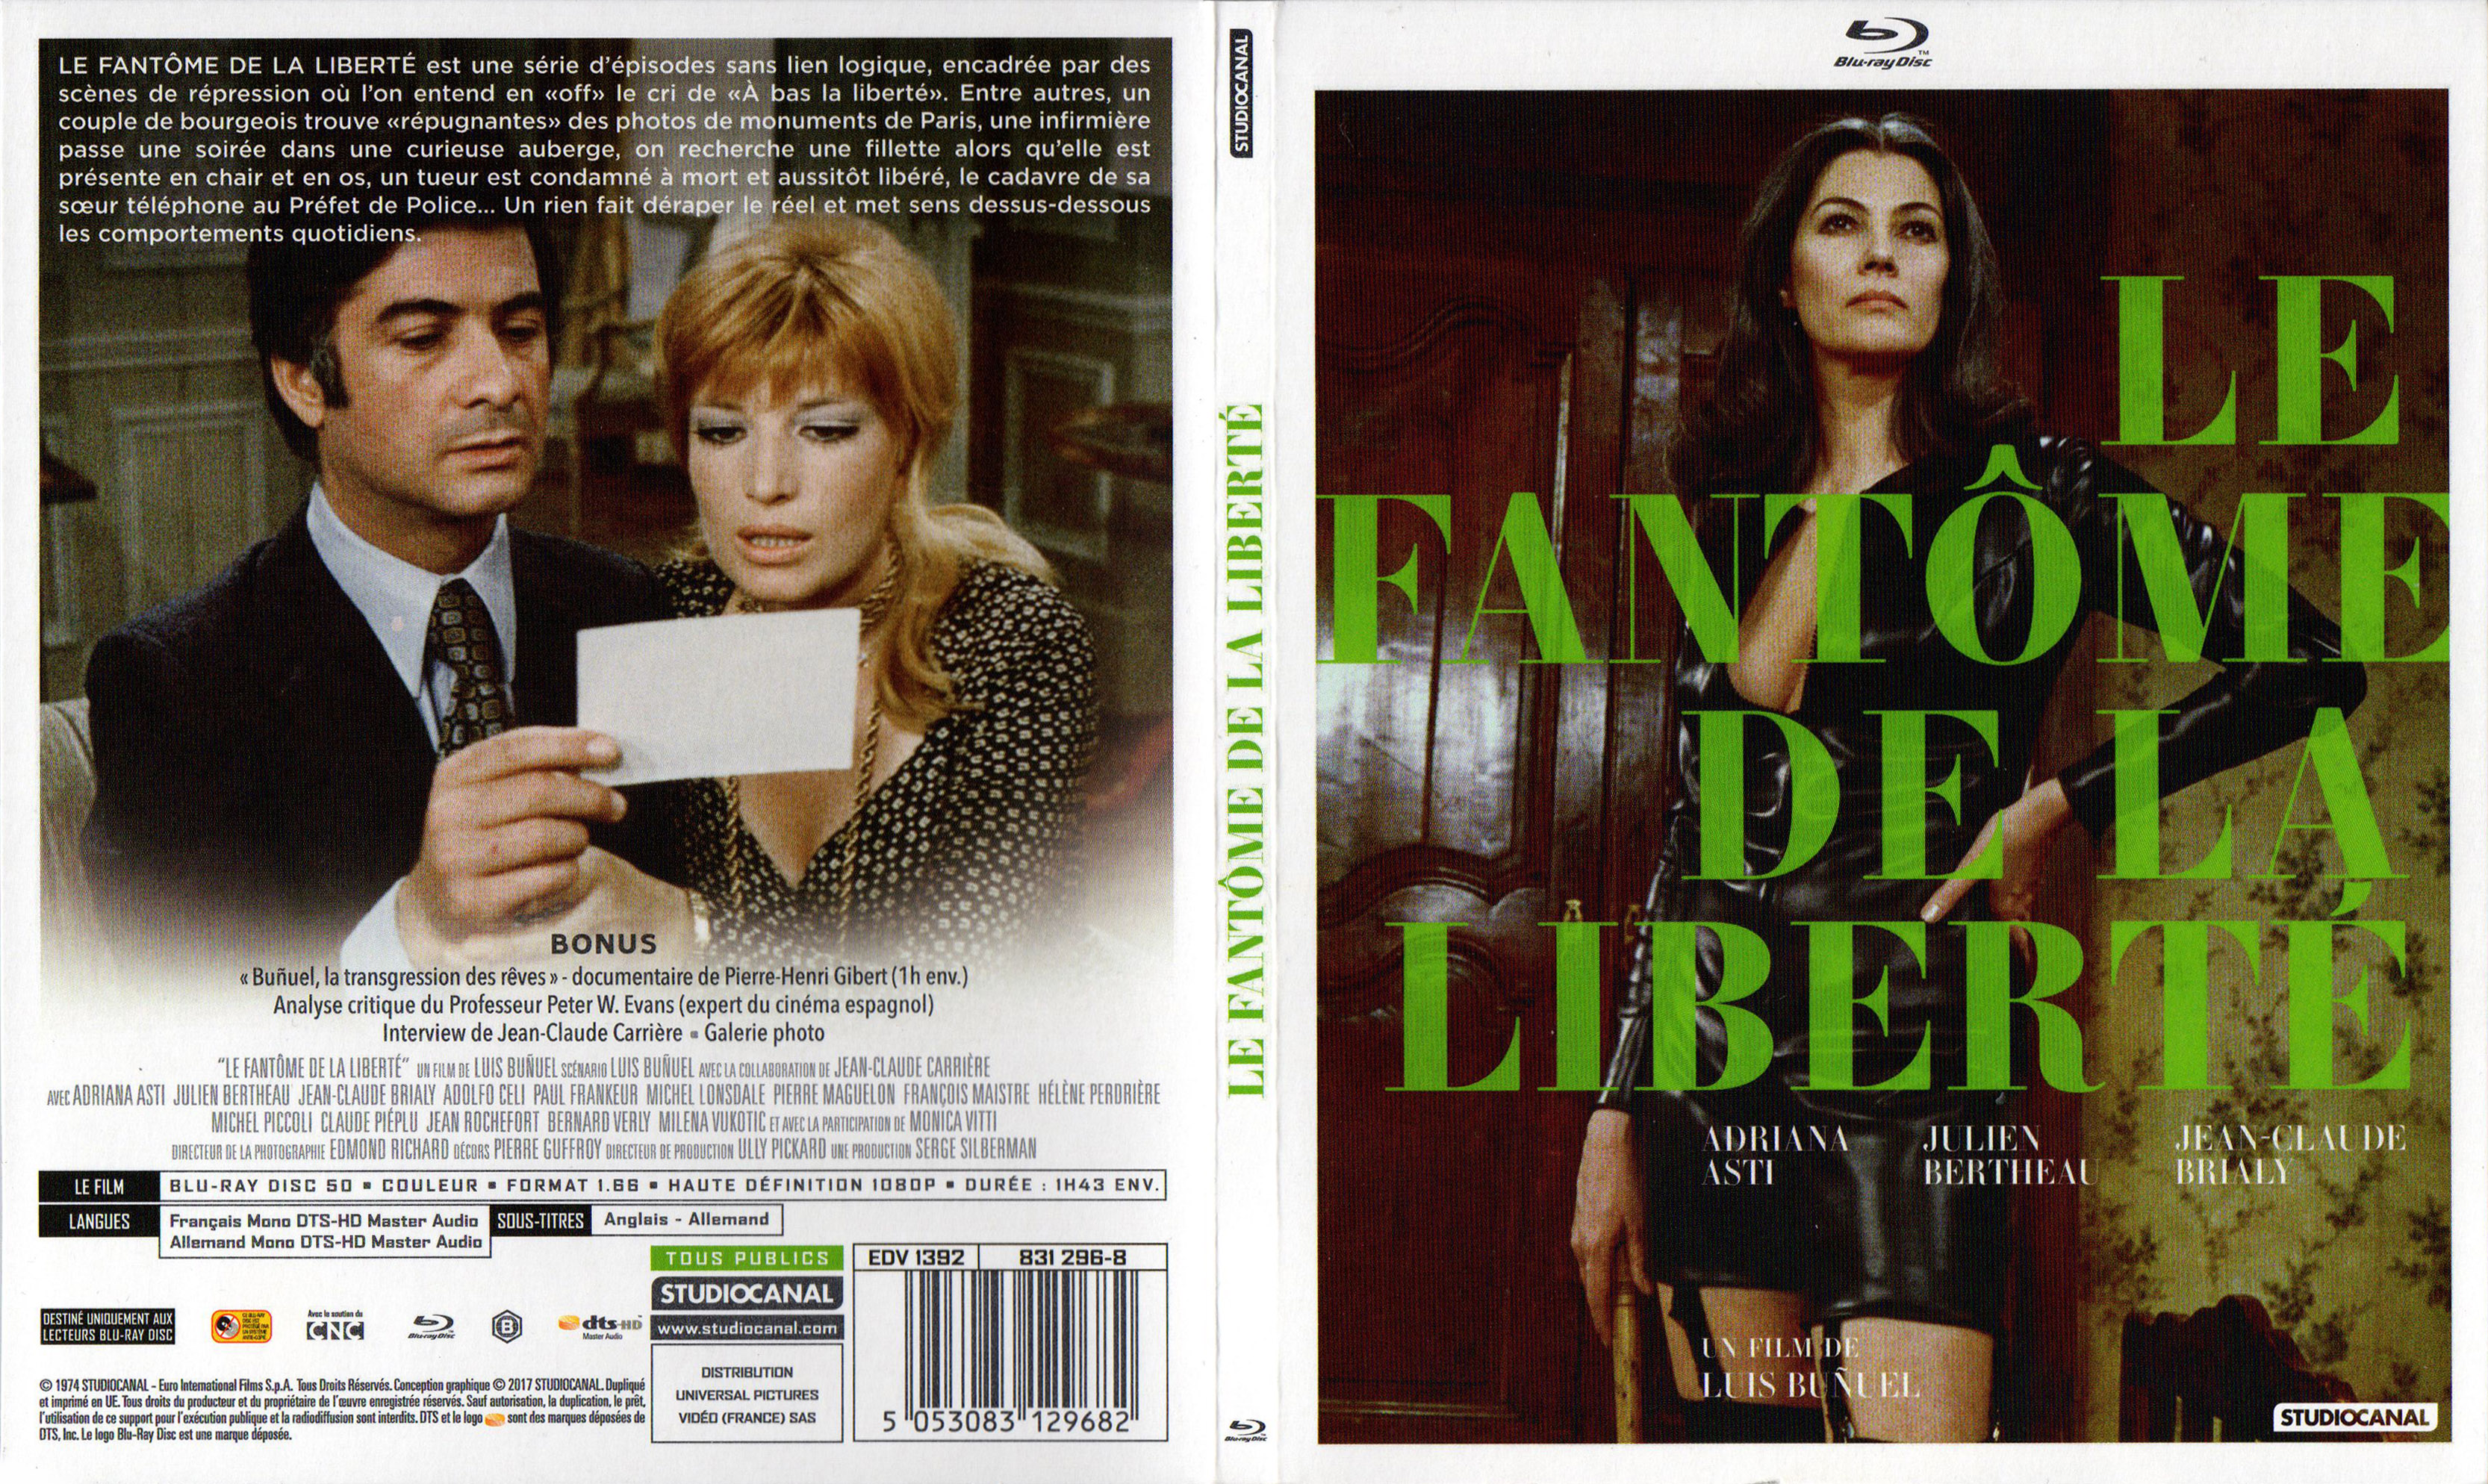 Jaquette DVD Le fantome de la libert (BLU-RAY)